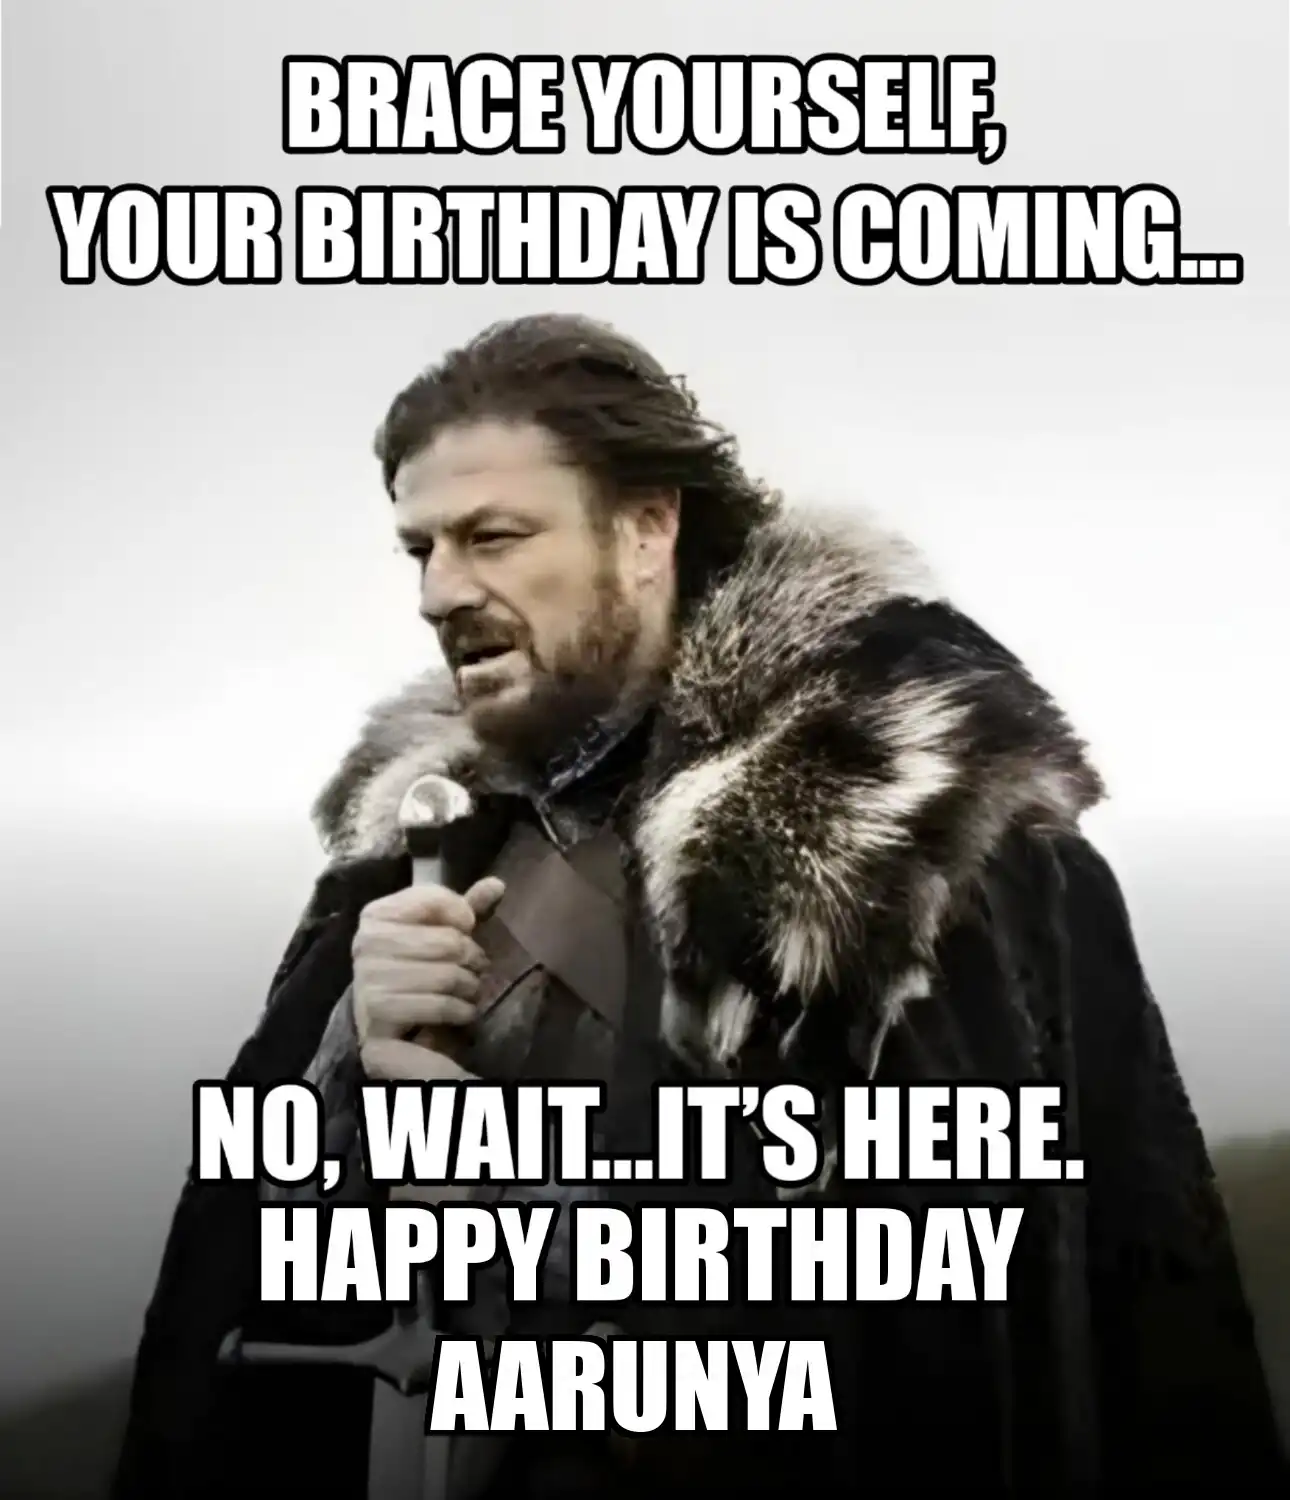 Happy Birthday Aarunya Brace Yourself Your Birthday Is Coming Meme